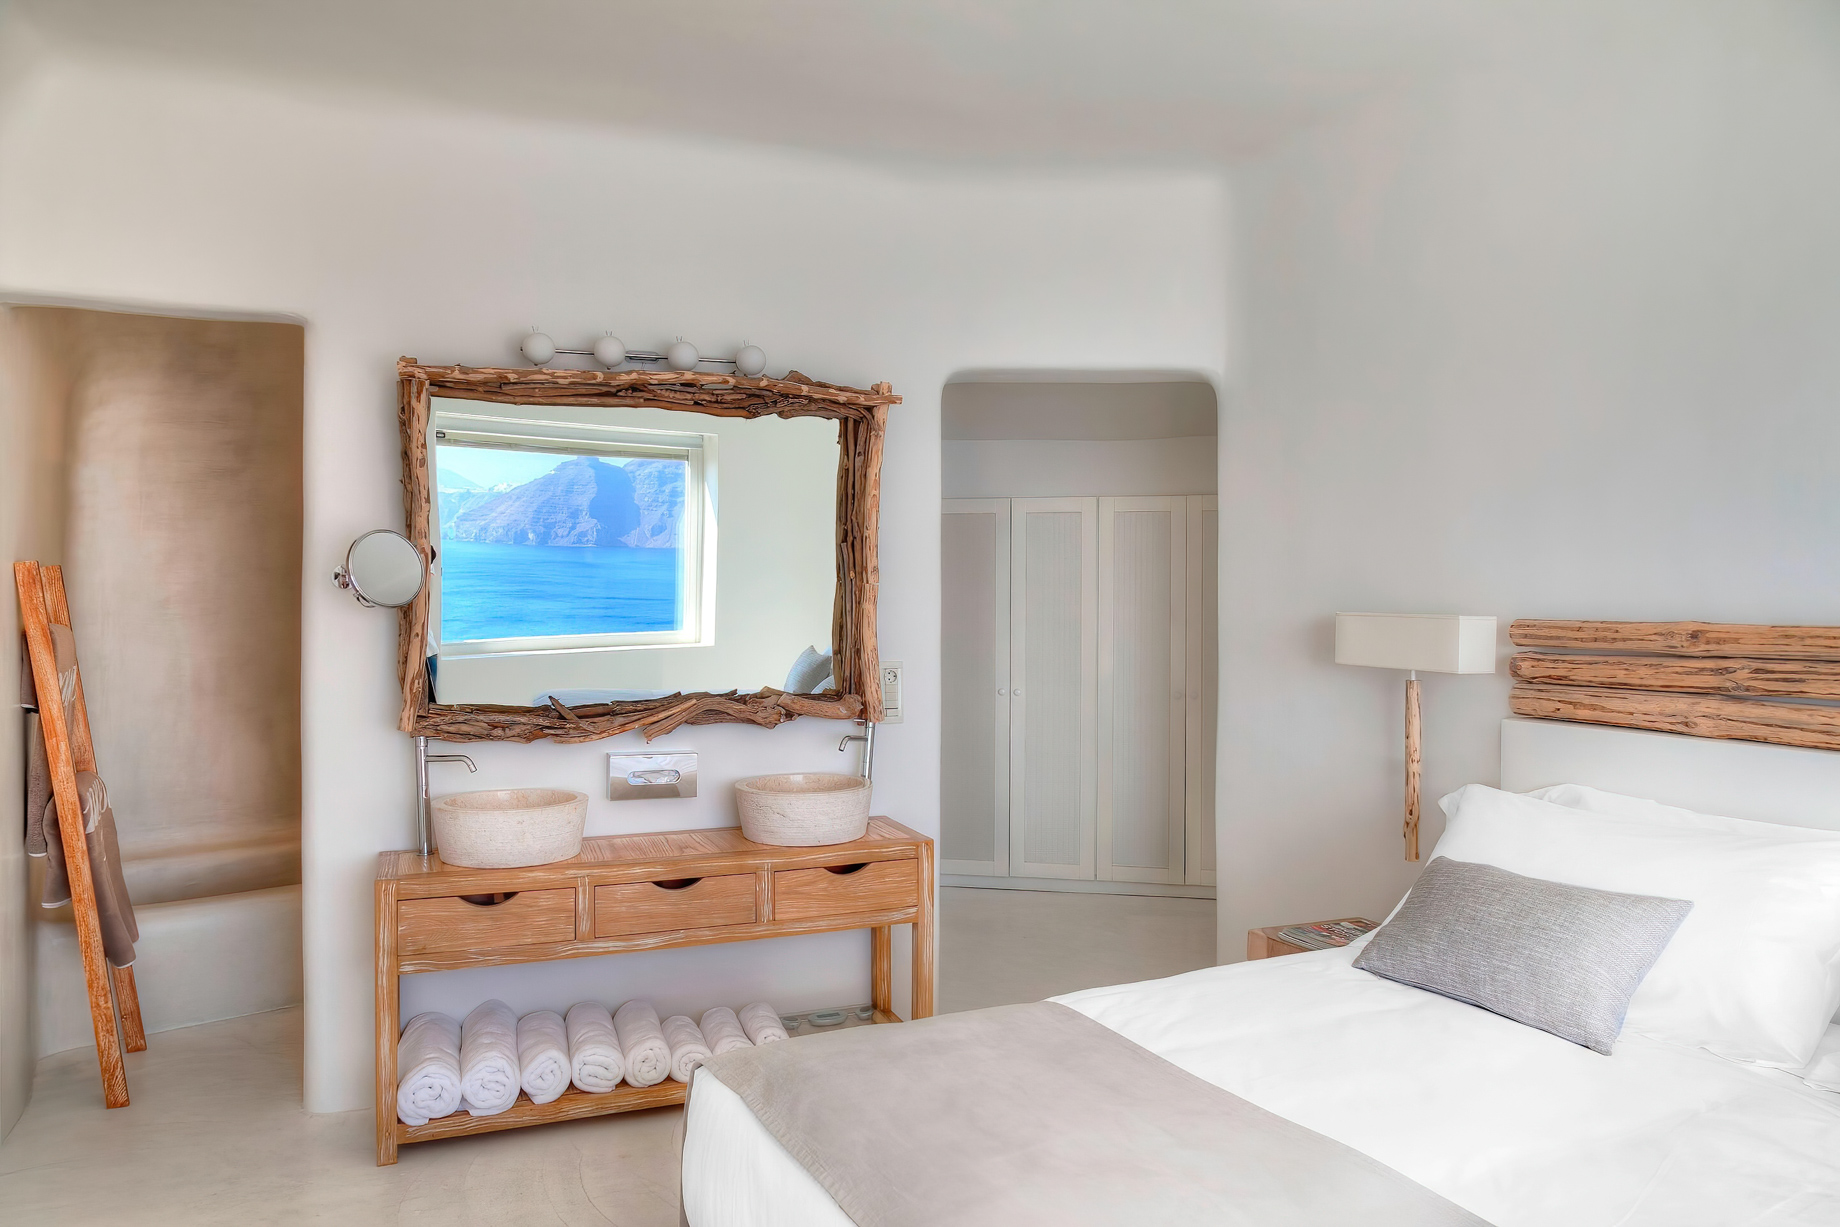 Mystique Hotel Santorini – Oia, Santorini Island, Greece - Mystery Villa Bedroom